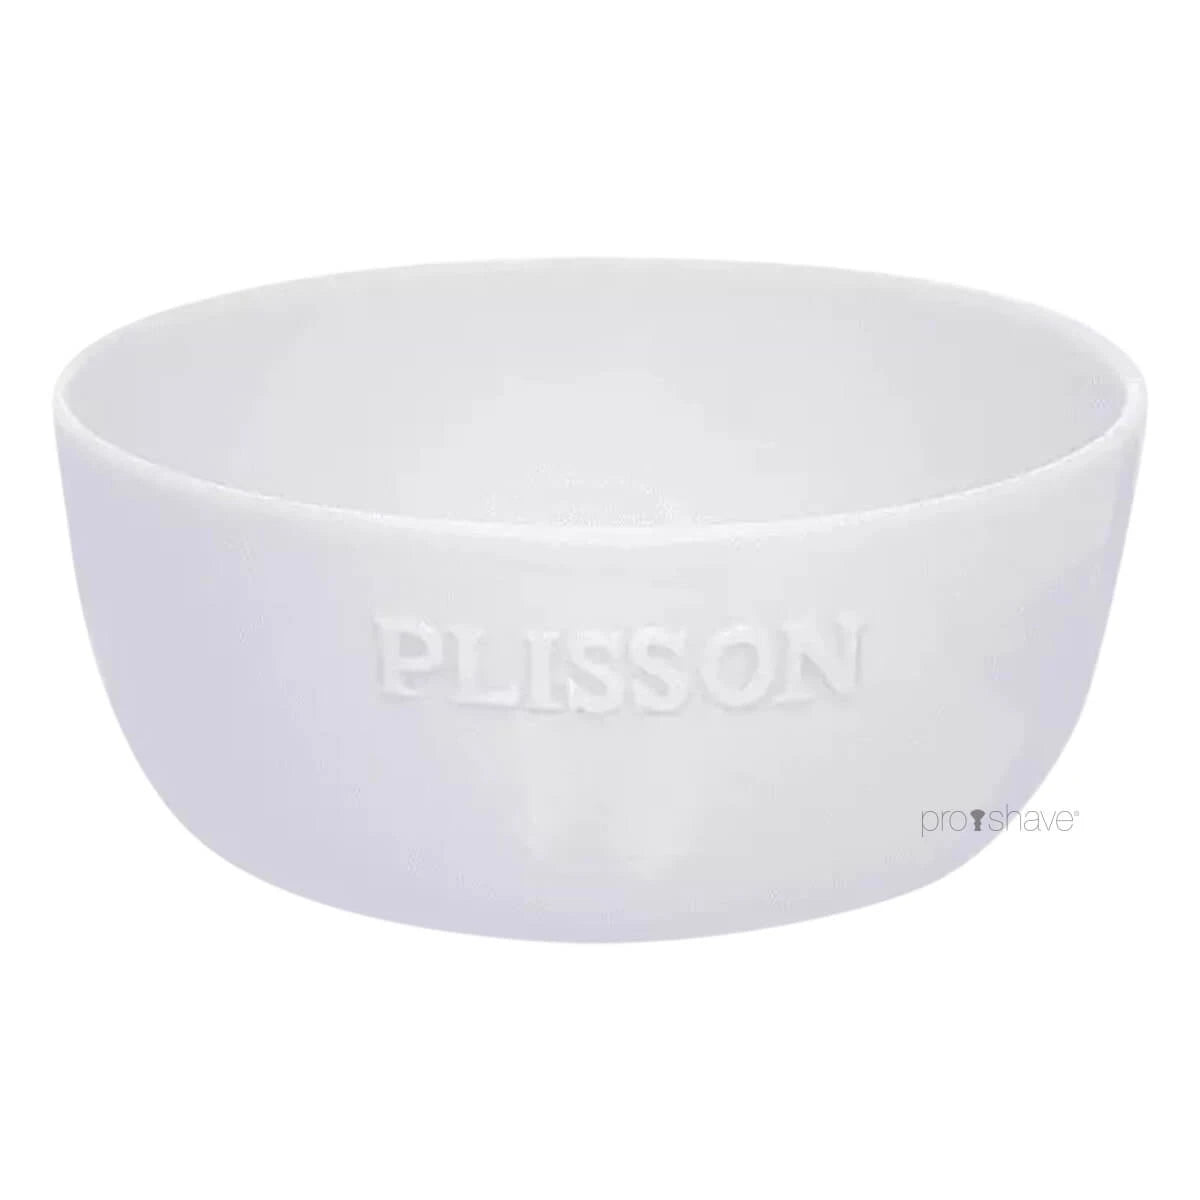 Plisson, Limoges Porcelain Shaving Bowl